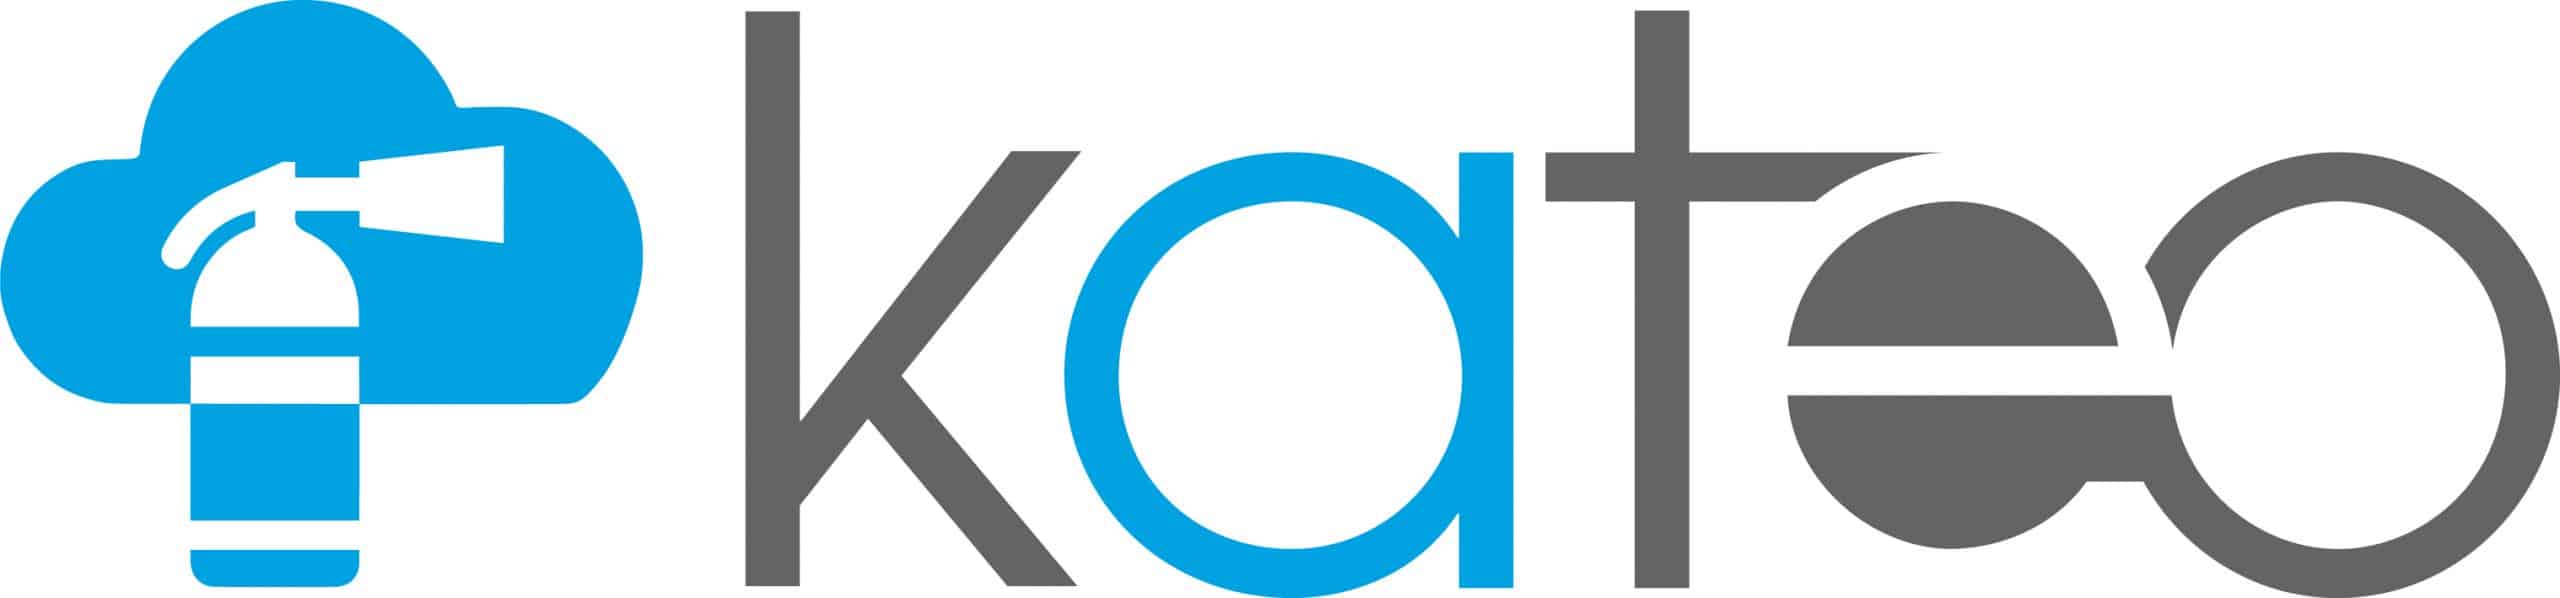 Logo KATEO plateforme digitale HSE